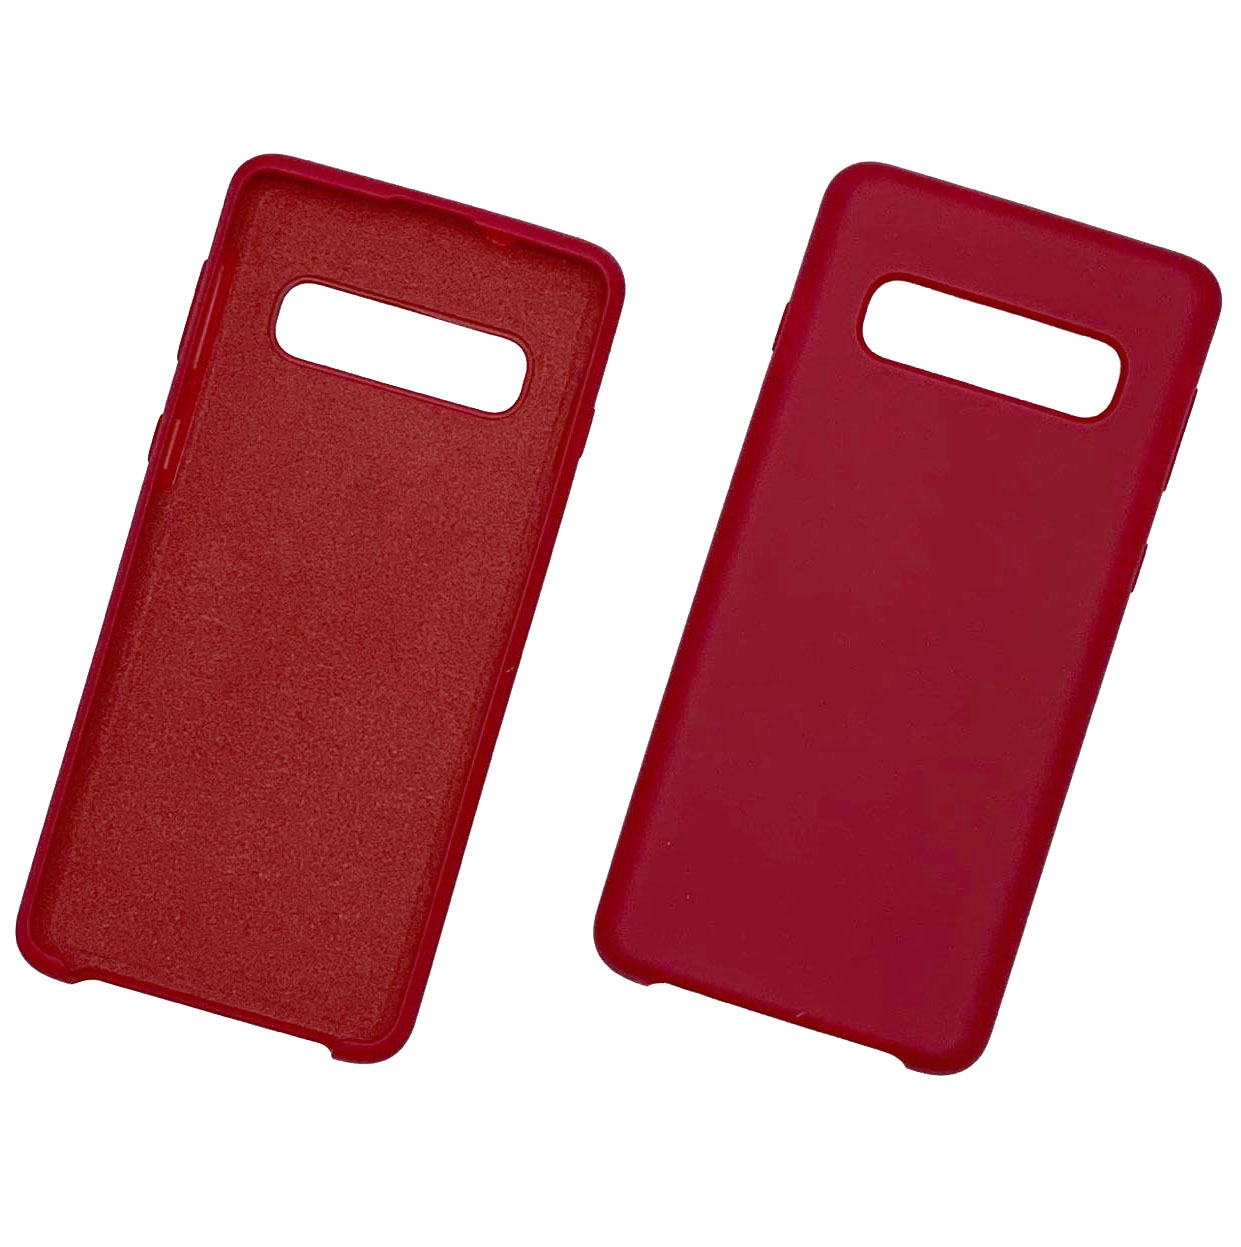 Чехол накладка Silicon Cover для SAMSUNG Galaxy S10 Plus (SM-G975), силикон, бархат, цвет бордовый.